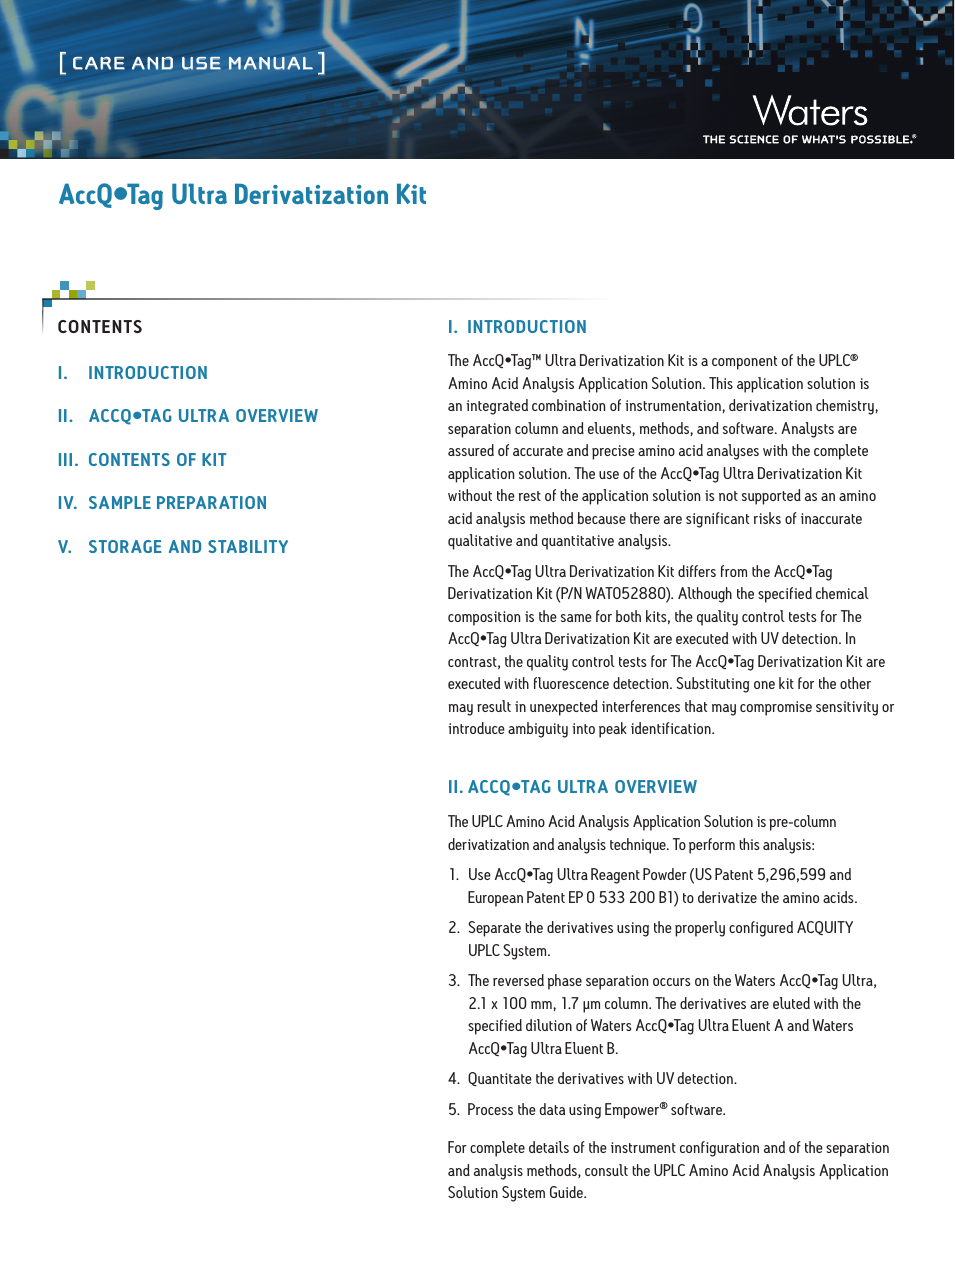 AccQ-Tag Ultra Derivatization Kit